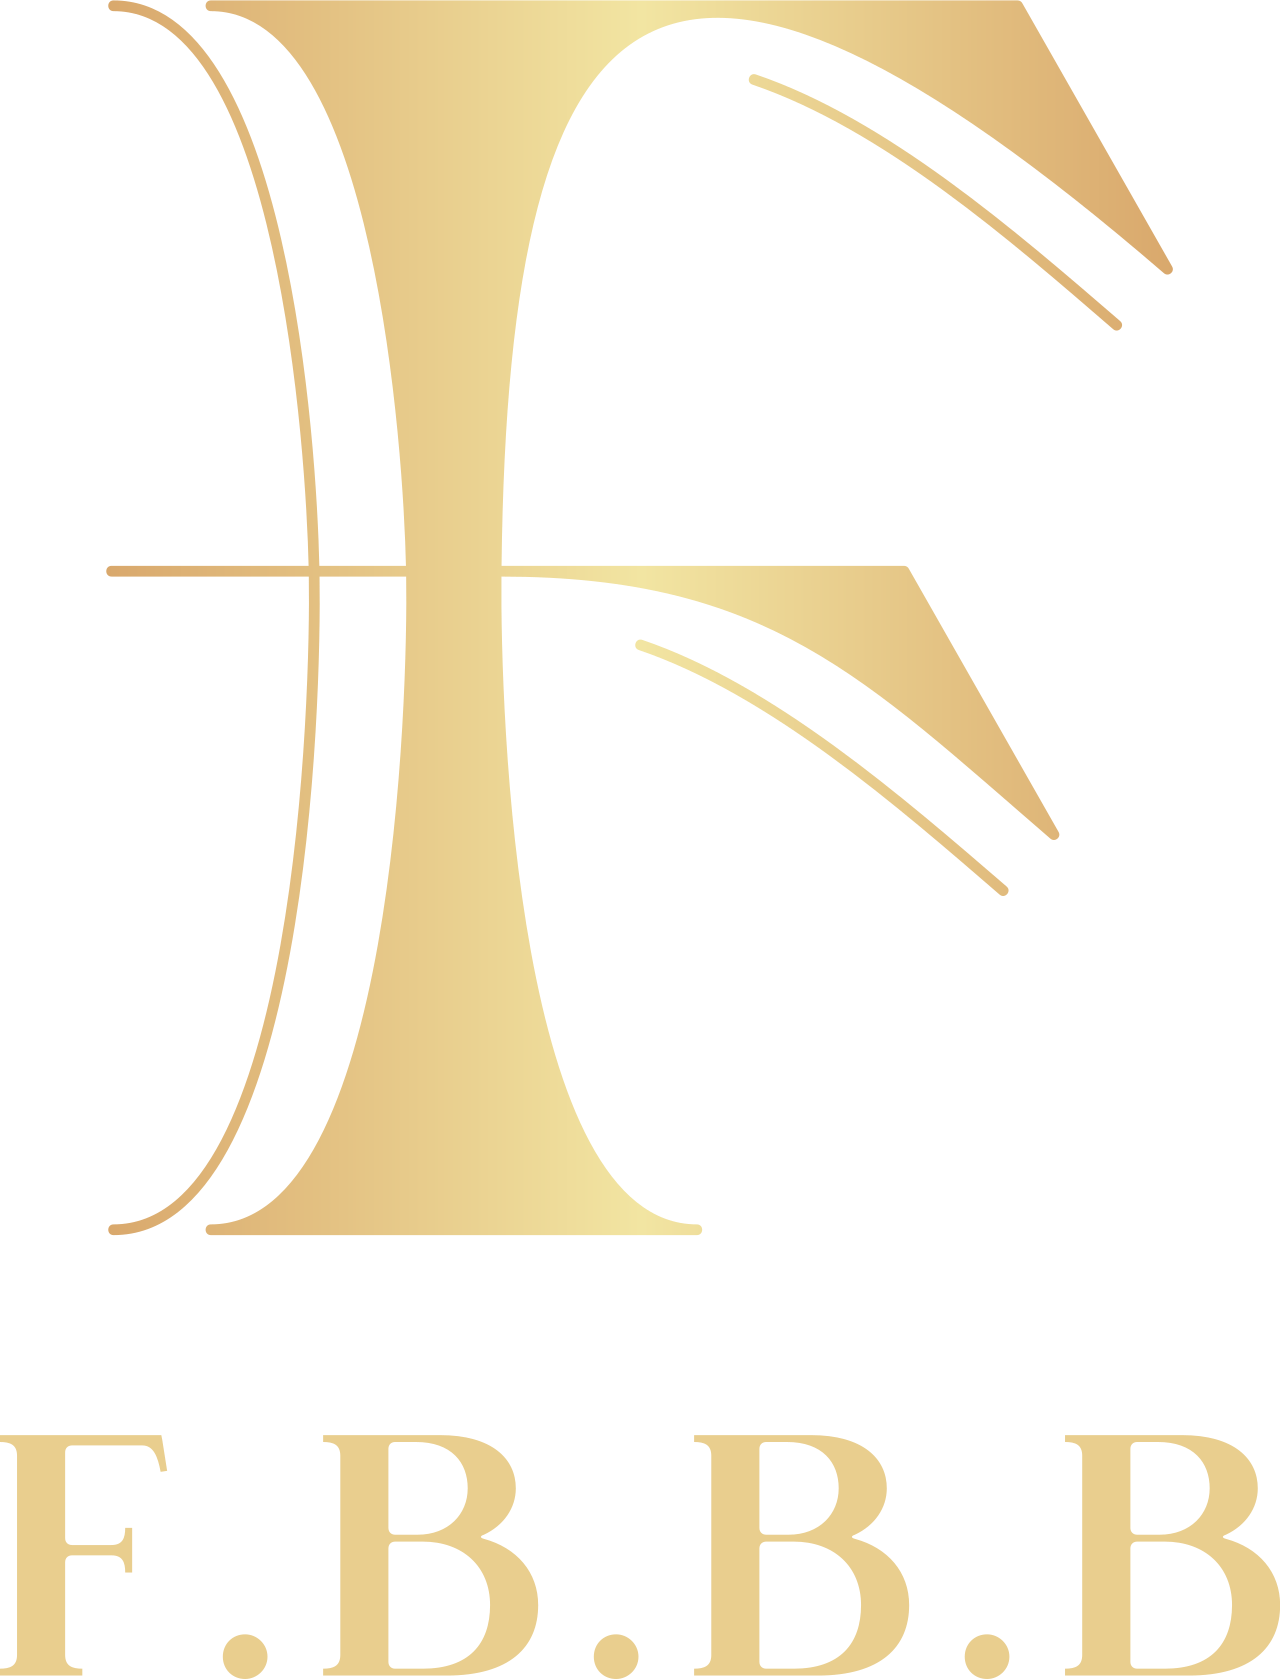 F.B.B.B's logo